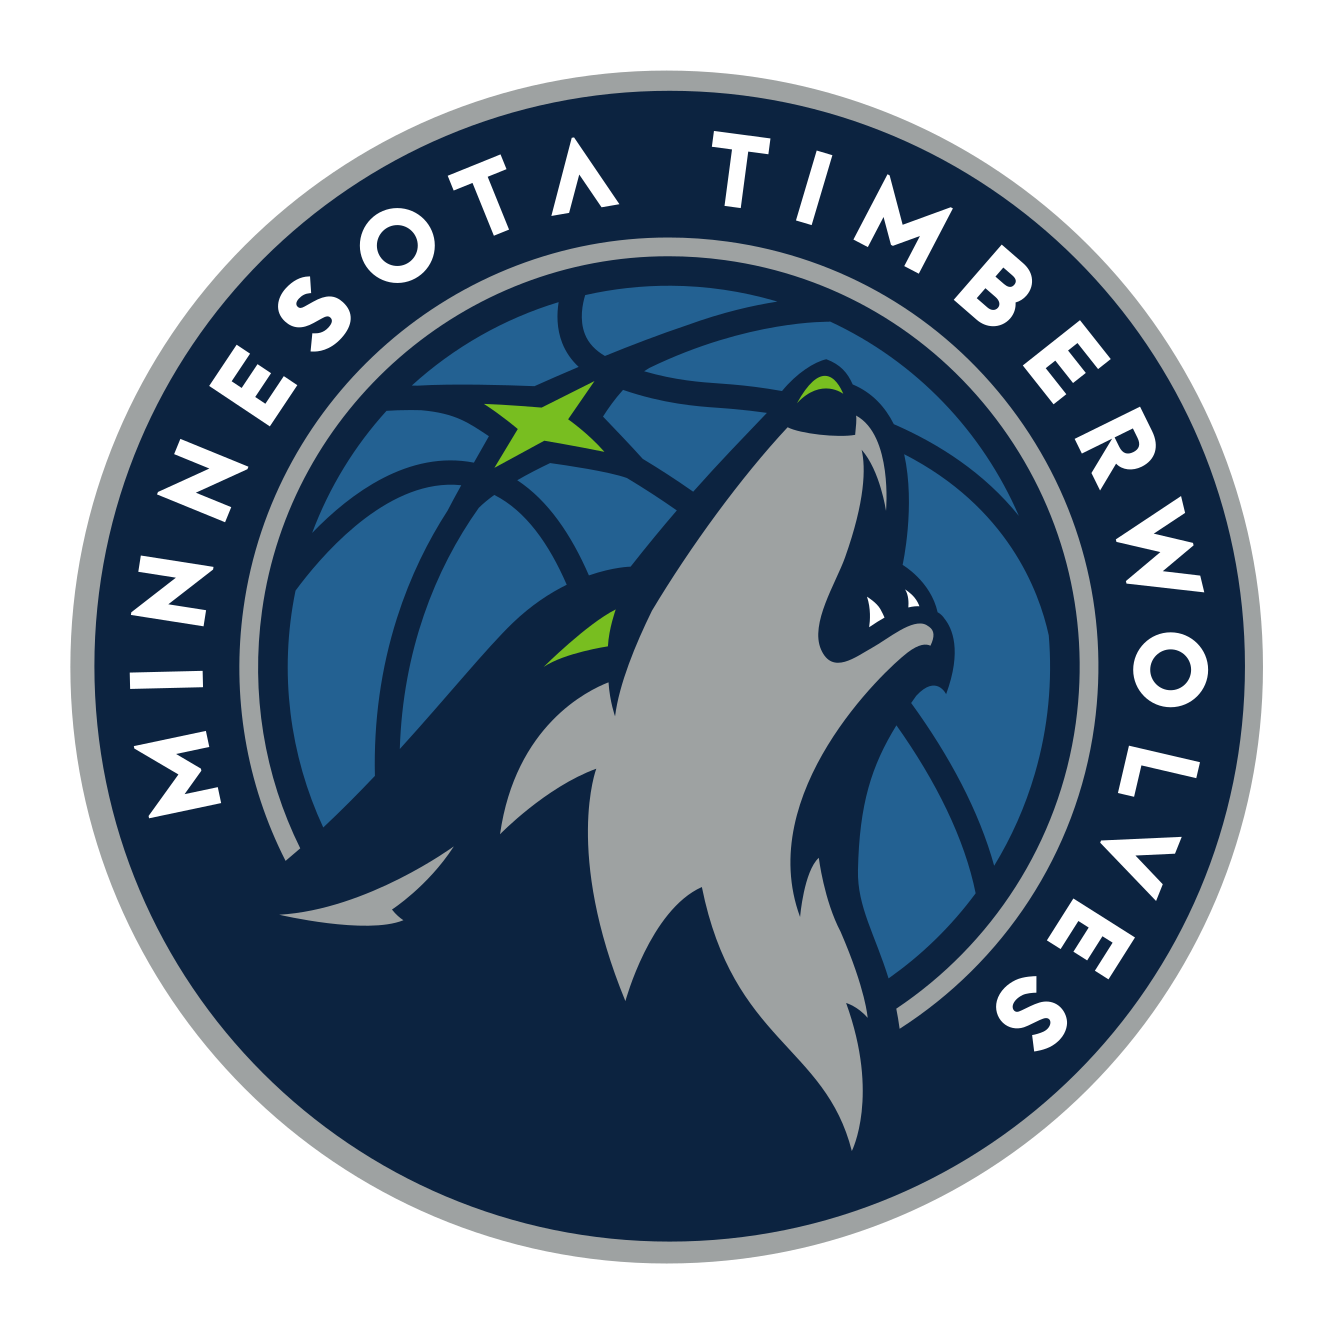 Minnesota Timberwolves Logo PNG HD and HQ Image pngteam.com